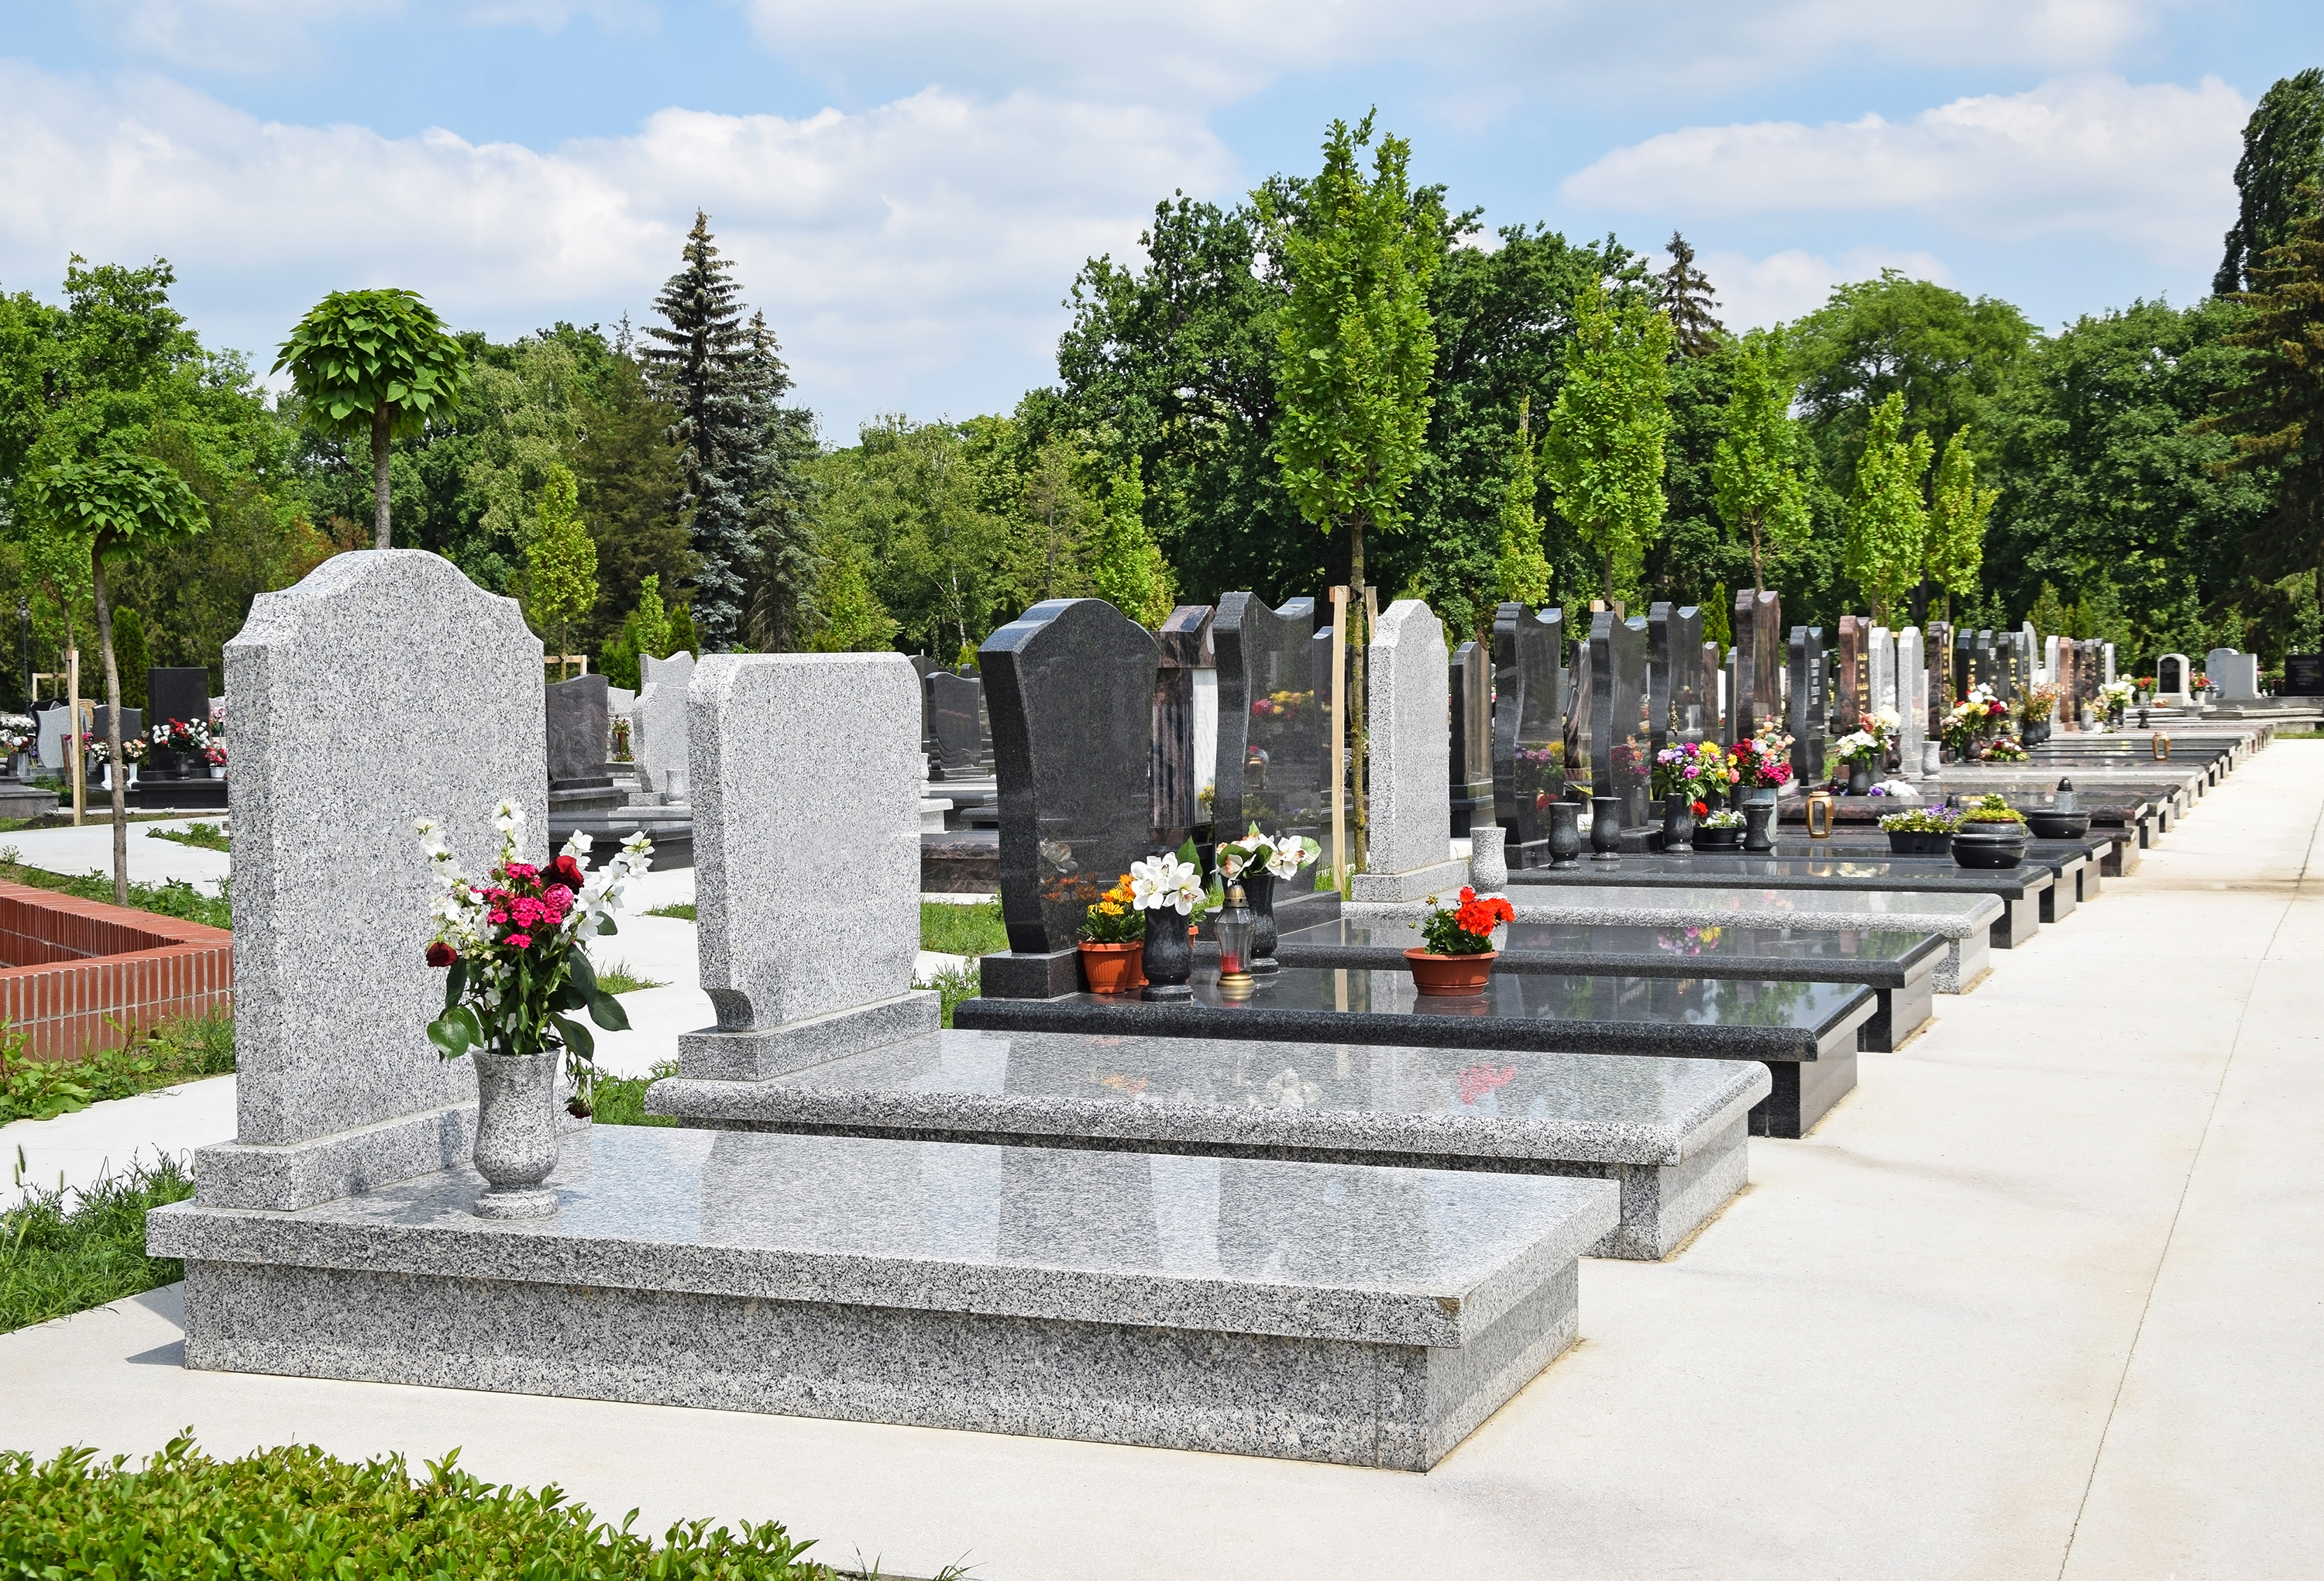 100% monument grade granite. Granite cemetery marker 18 x 9 x 3 includes standard engraving to design shown 